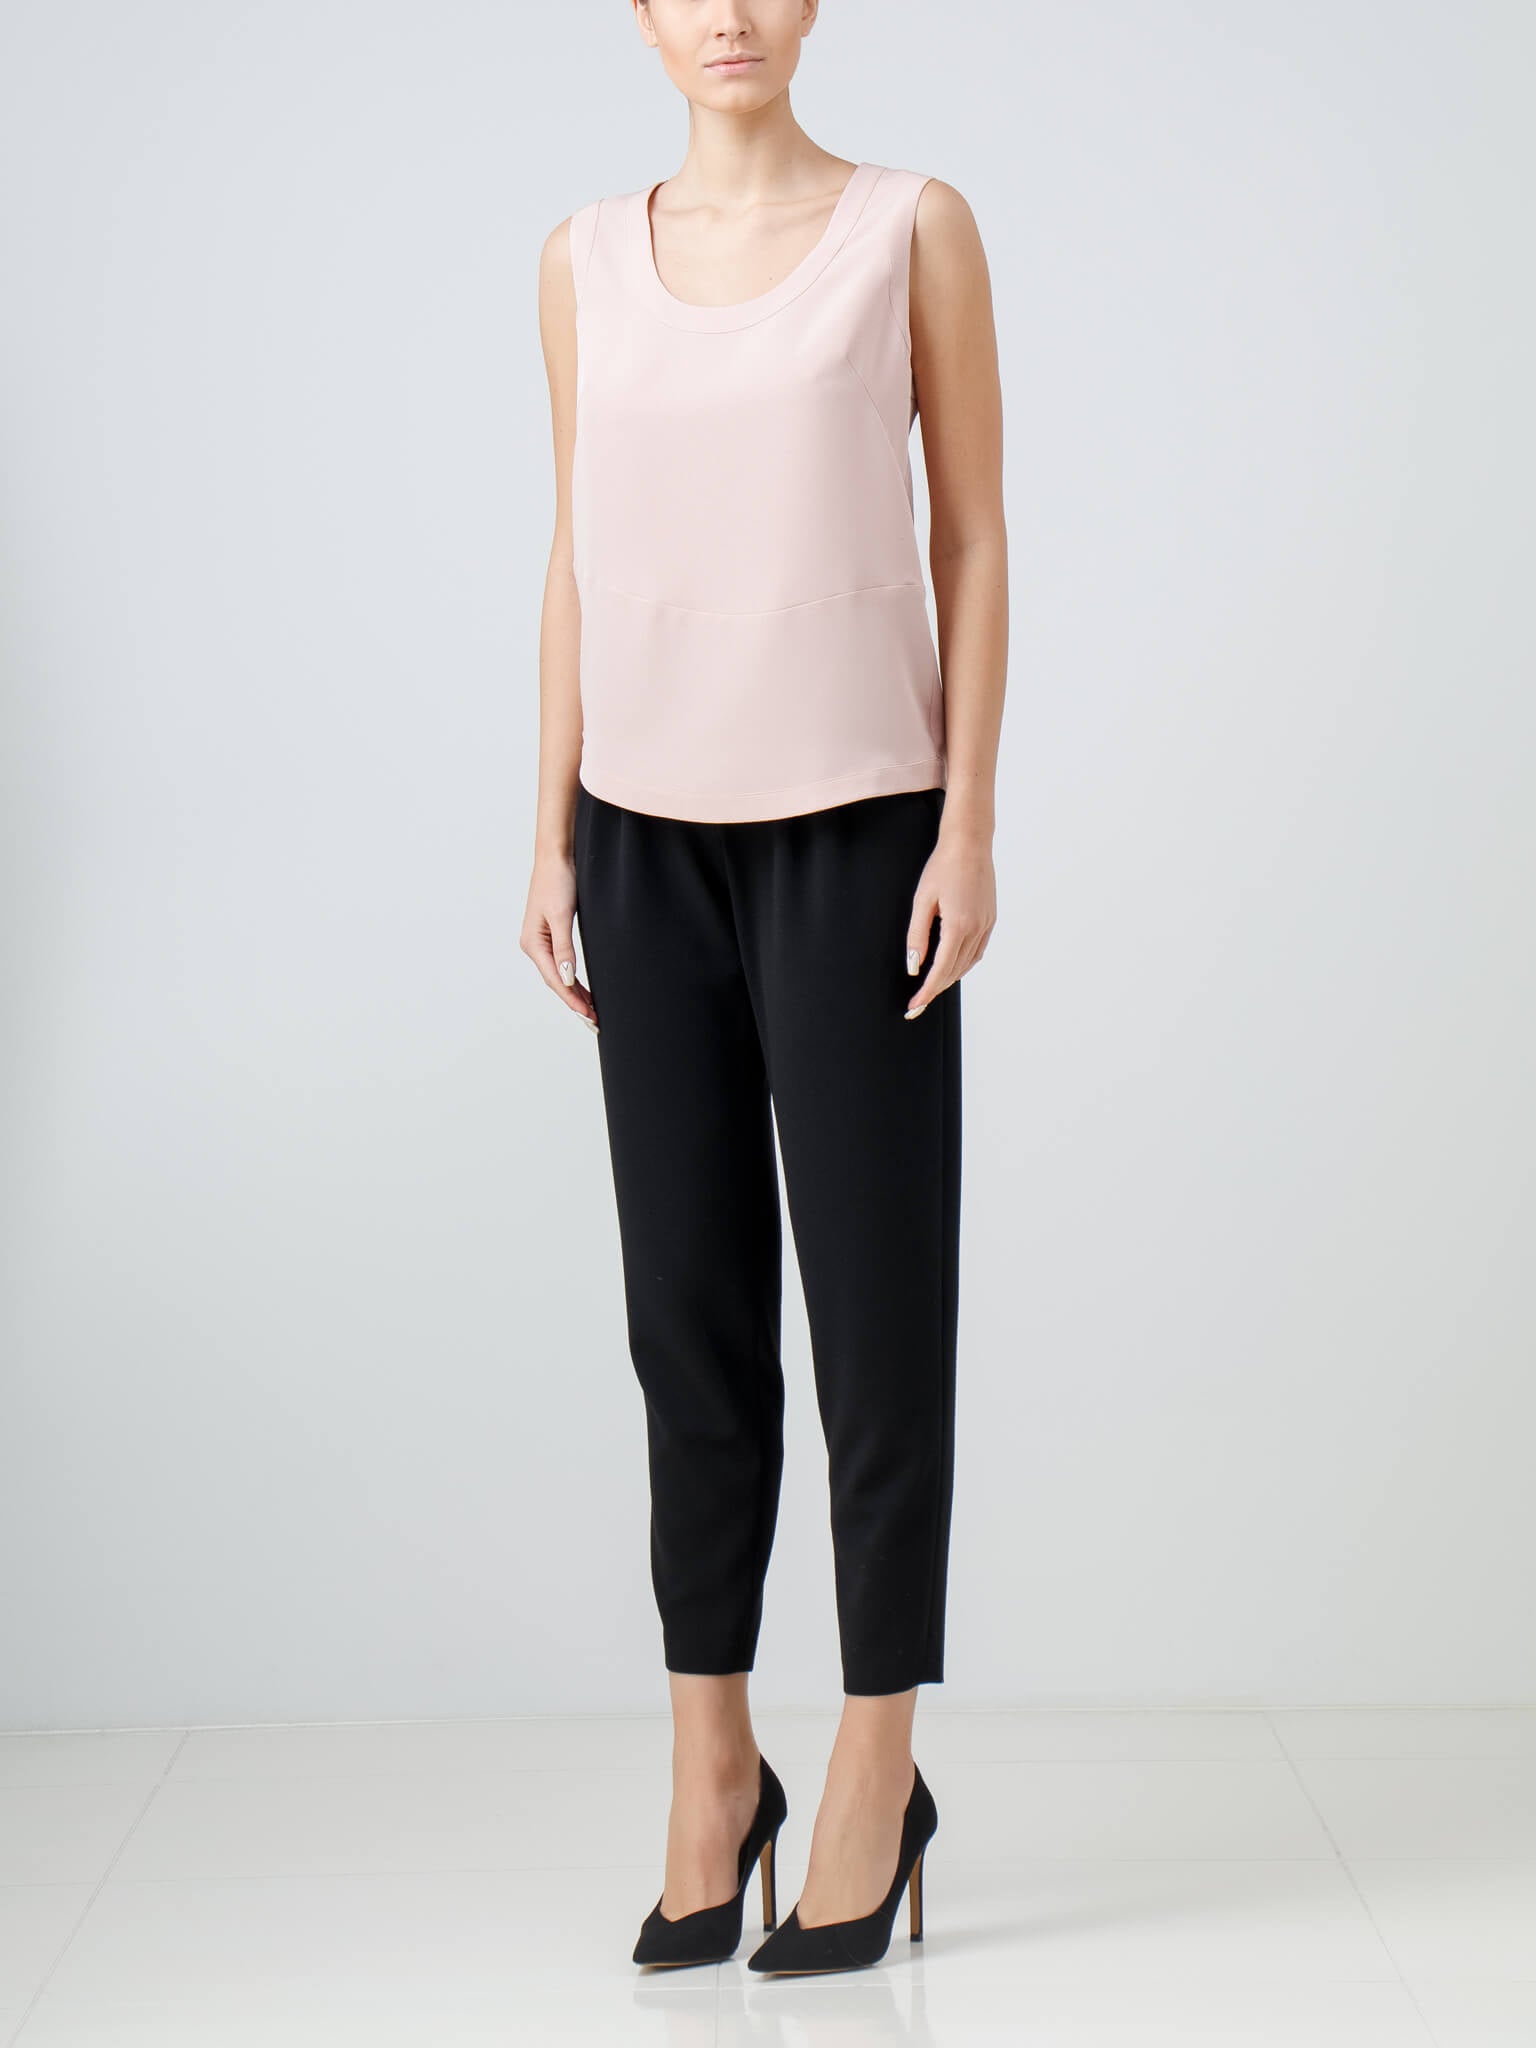 Light pink sleeveless asymmetric blouse